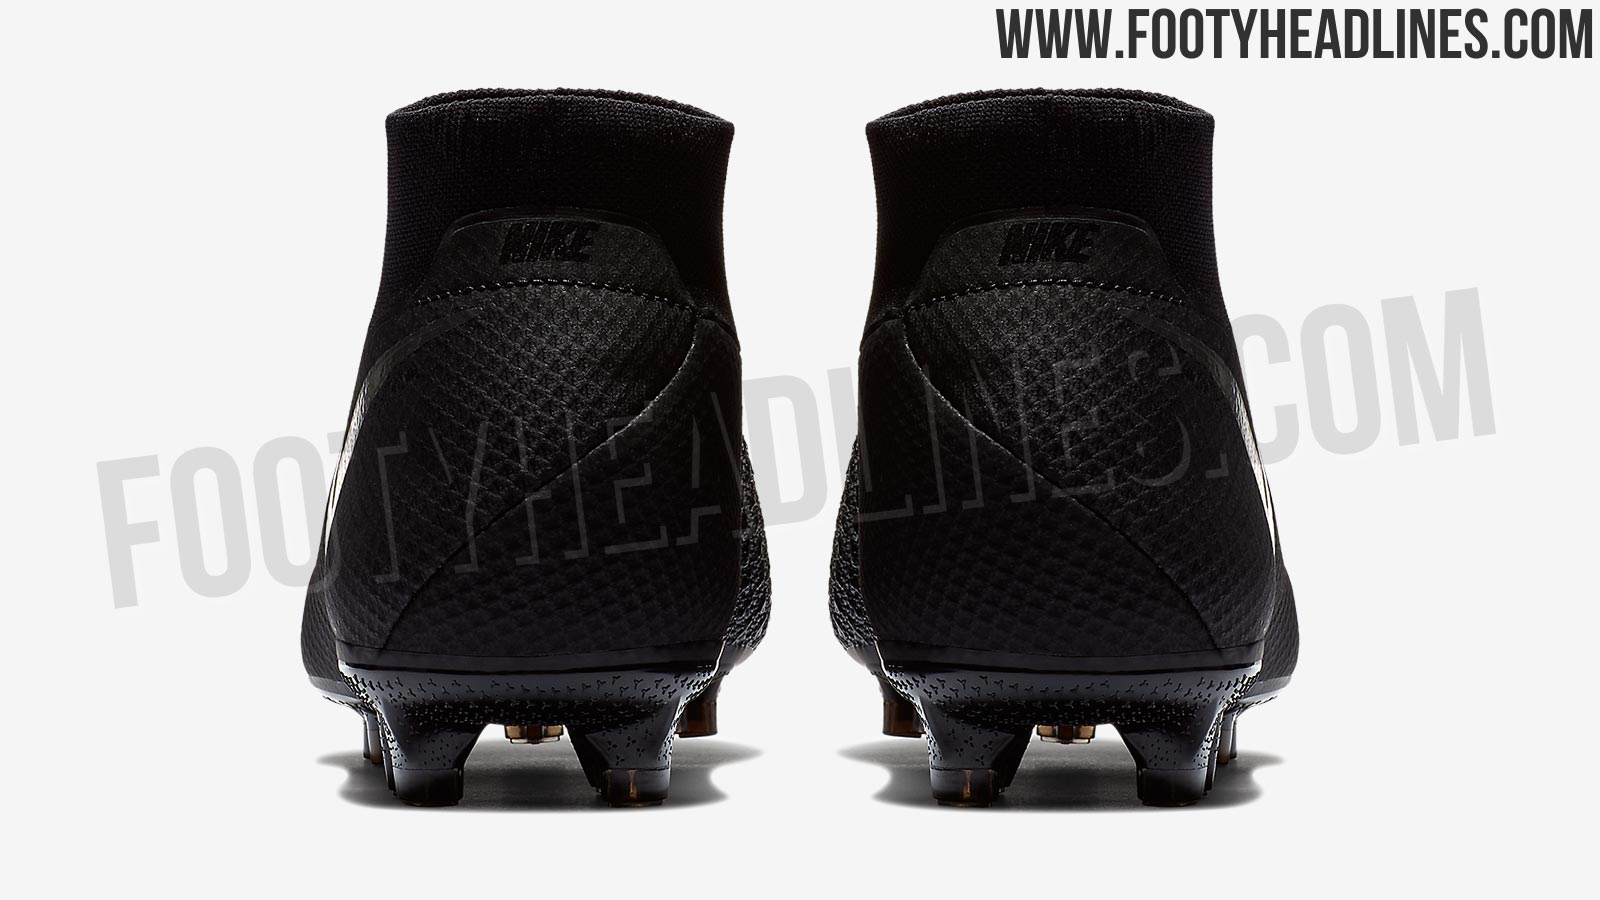 Blackout Nike Phantom Vision Elite Black Pack Boots Leaked - Footy ...